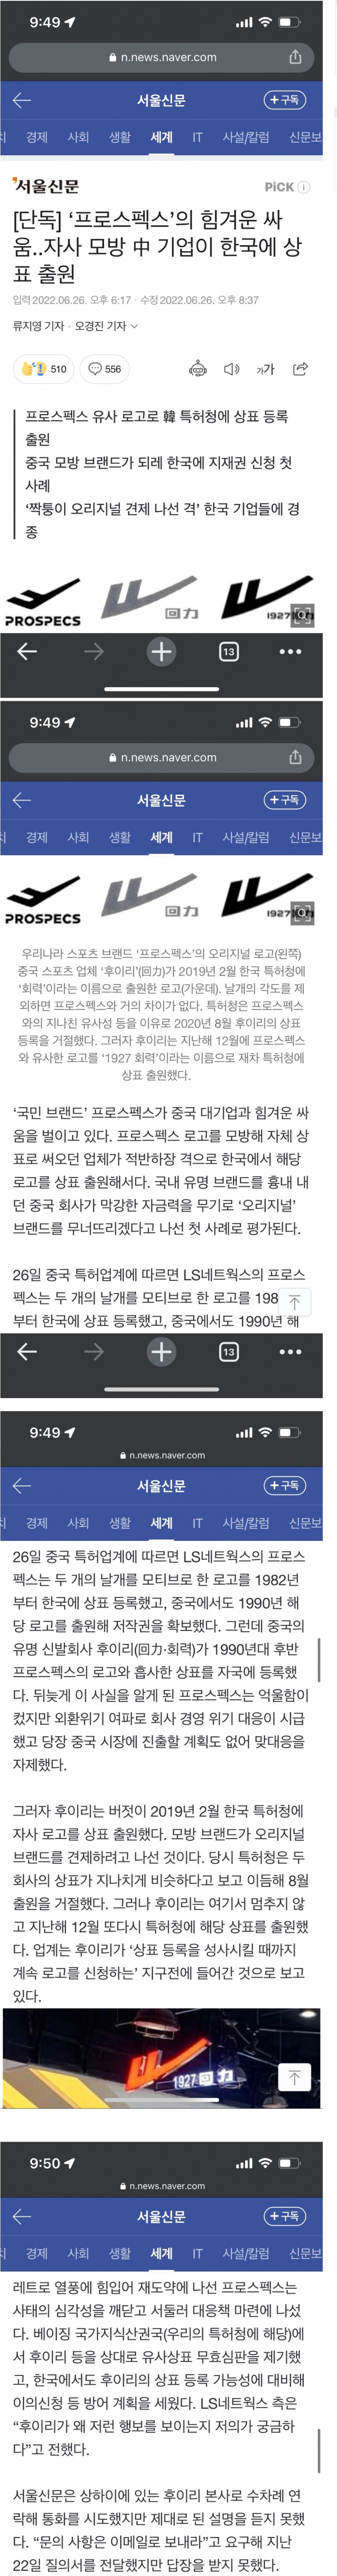 nokbeon.net-[단독] ‘프로스펙스’의 힘겨운 싸움..자사 모방 中 기업이 한국에 상표 출원-1번 이미지